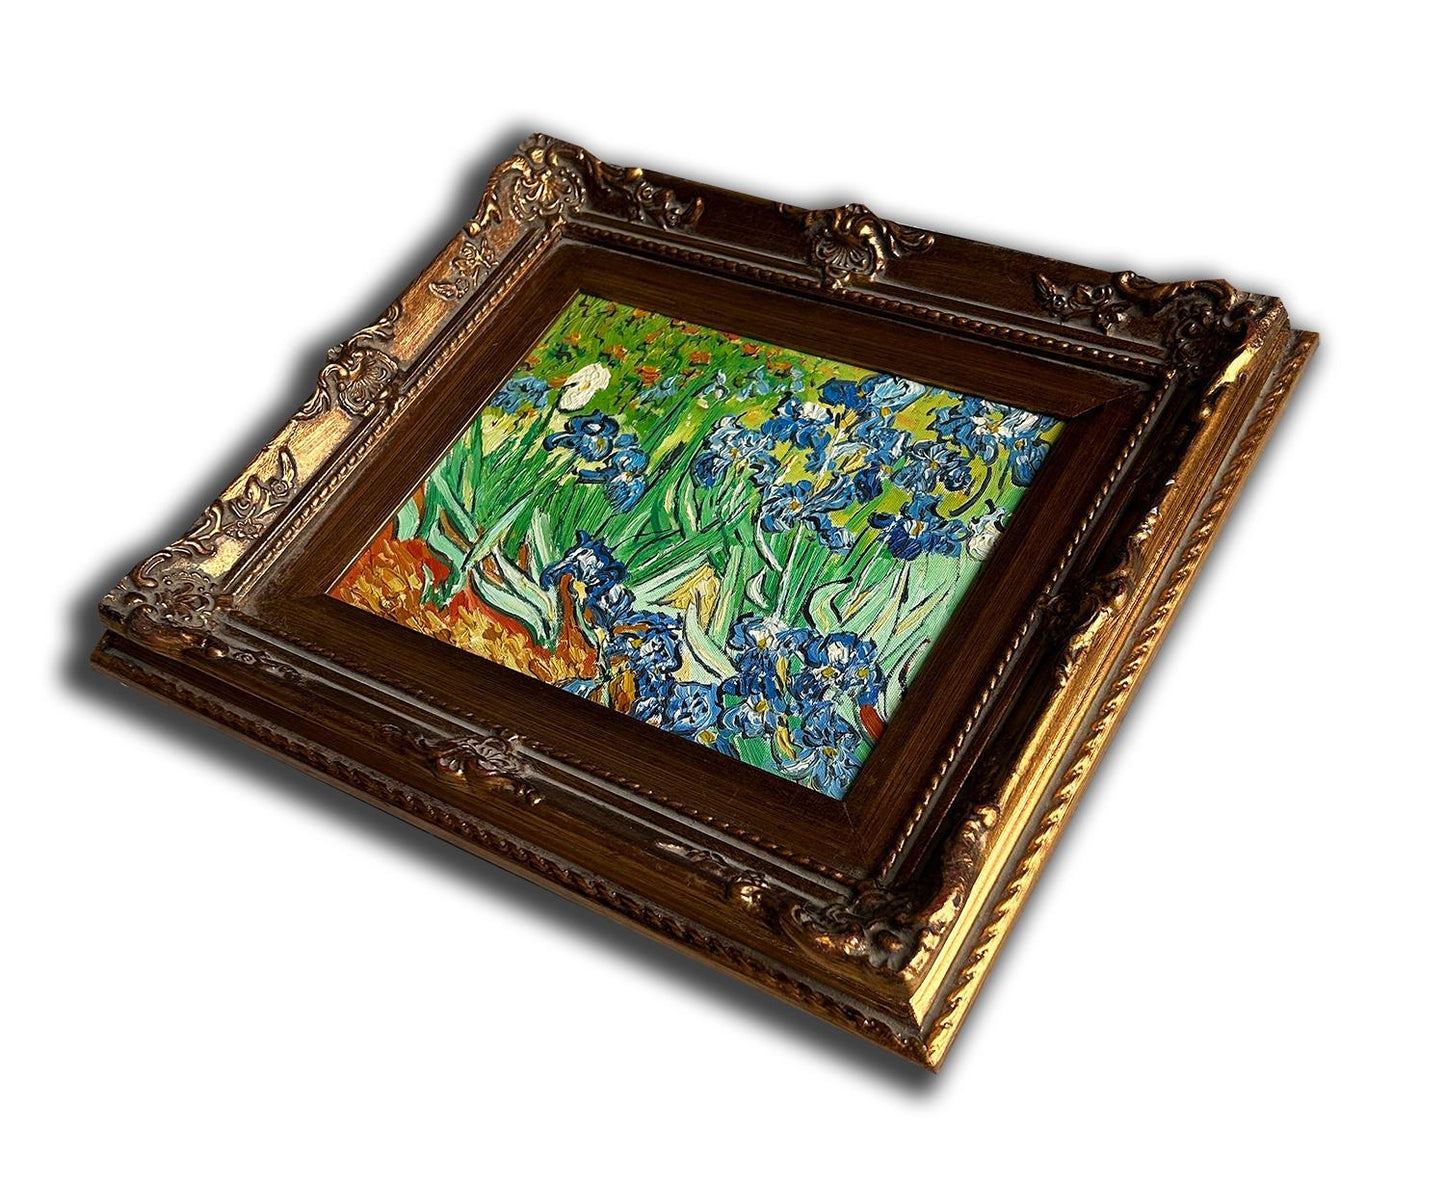 Irises By Van Gogh 34x39 cm eller 14x16 ins